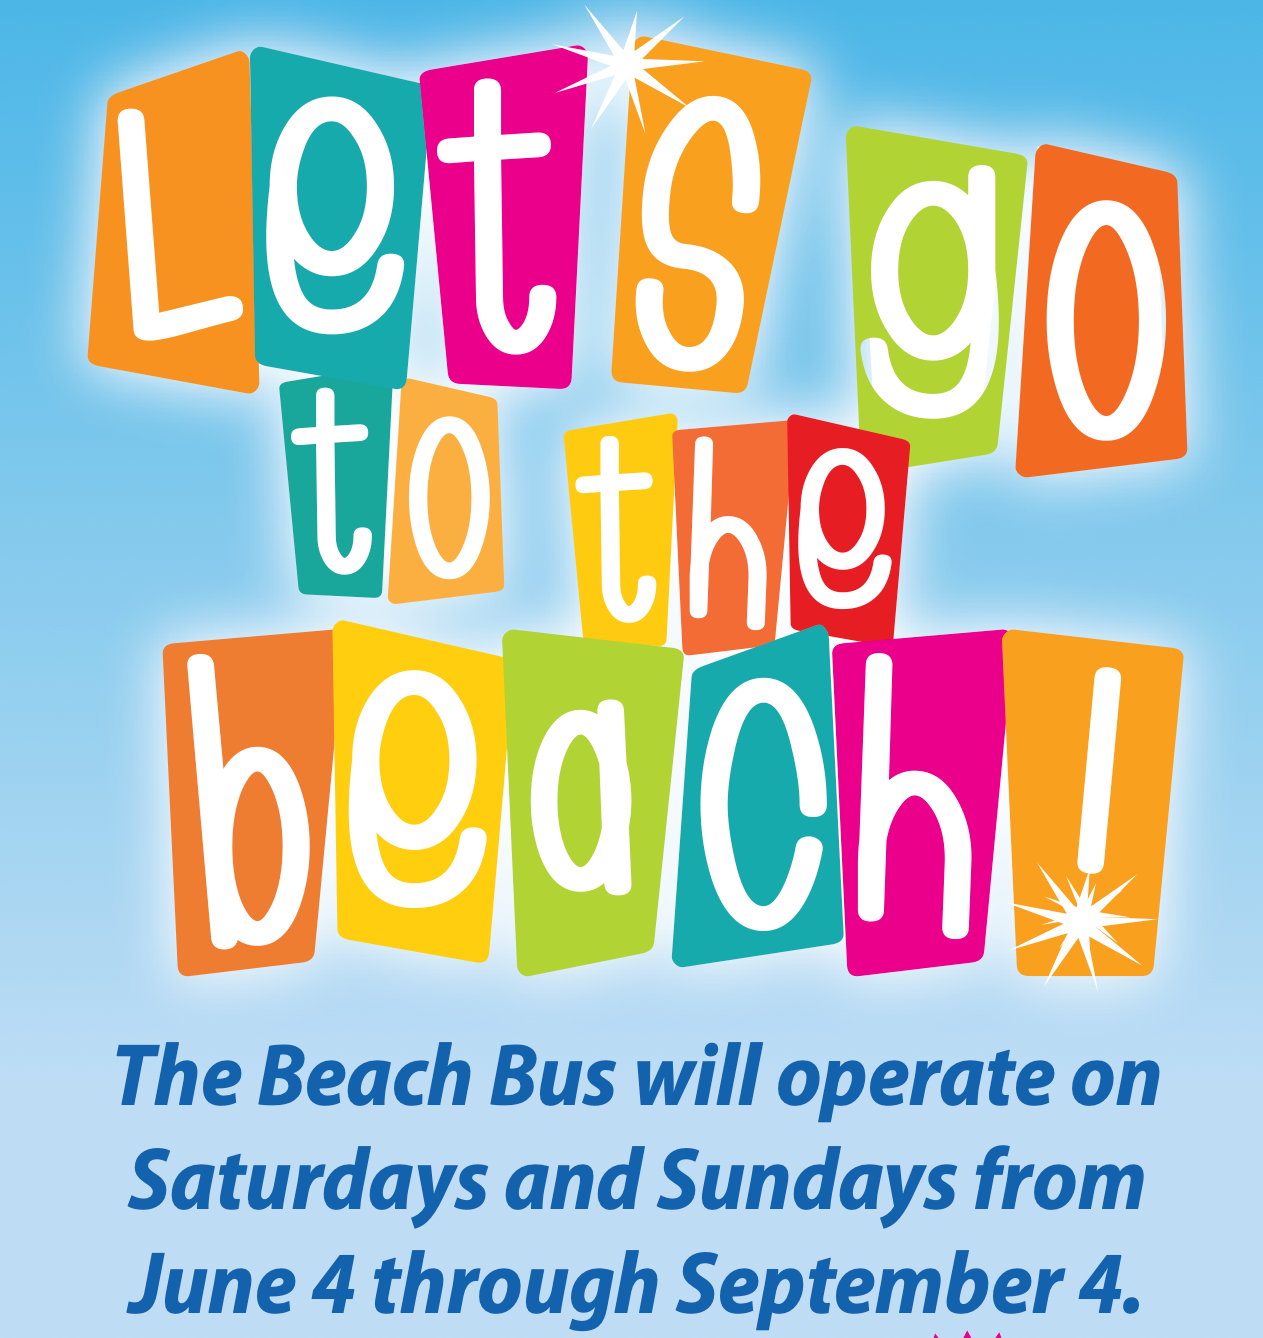 Summer Beach Bus Service is Back Head to Santa Monica with Santa Clarita Transit All Summer Long!